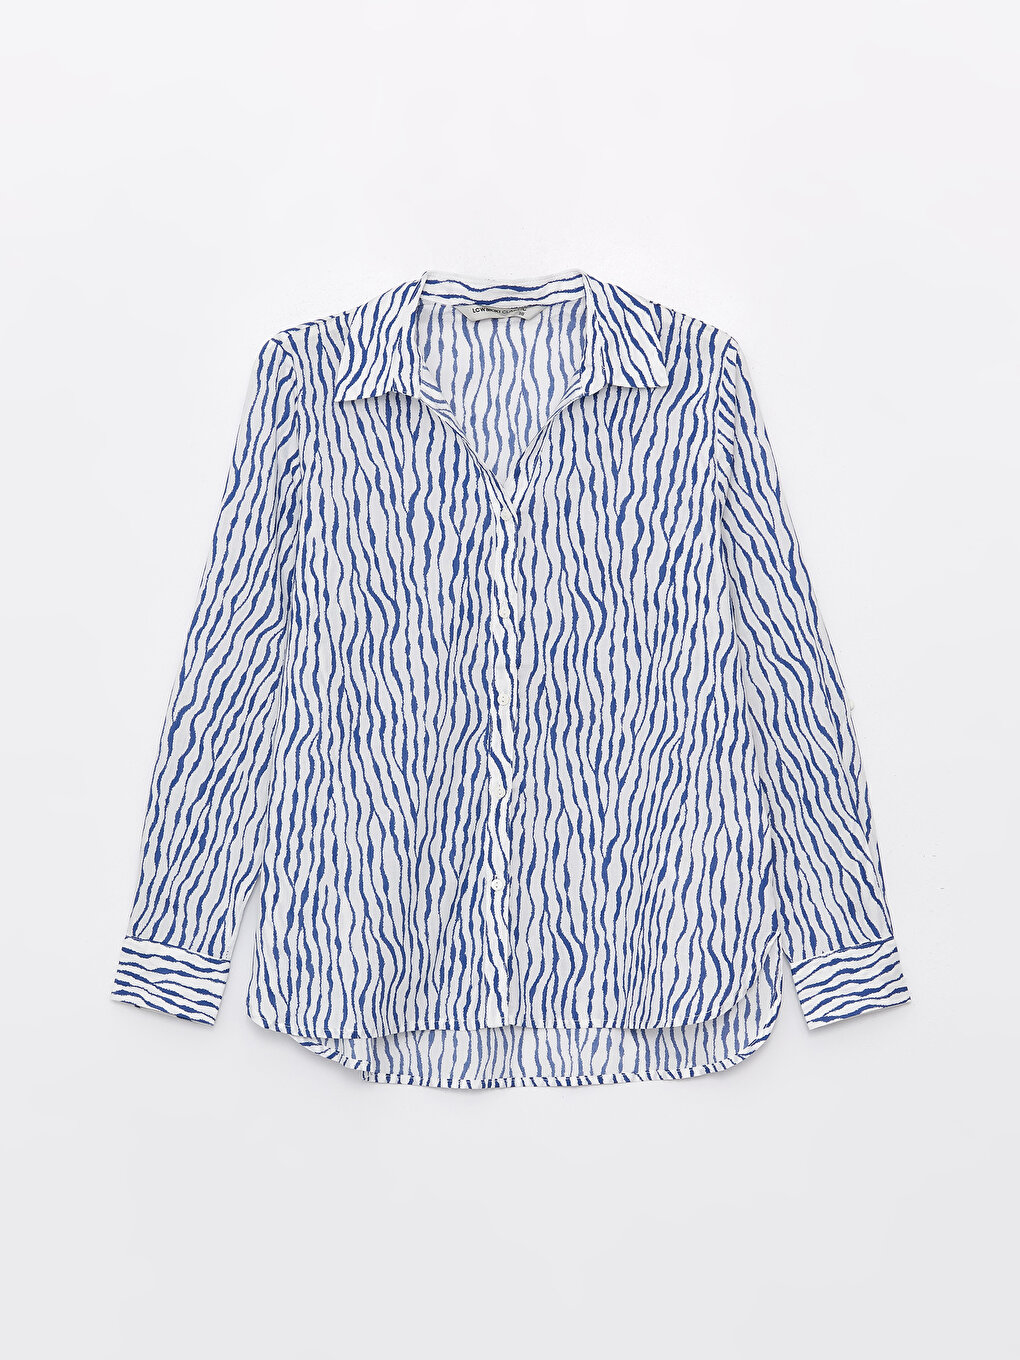 Patterned Long Sleeve Women's Shirt -S48714Z8-LRA - S48714Z8-LRA 